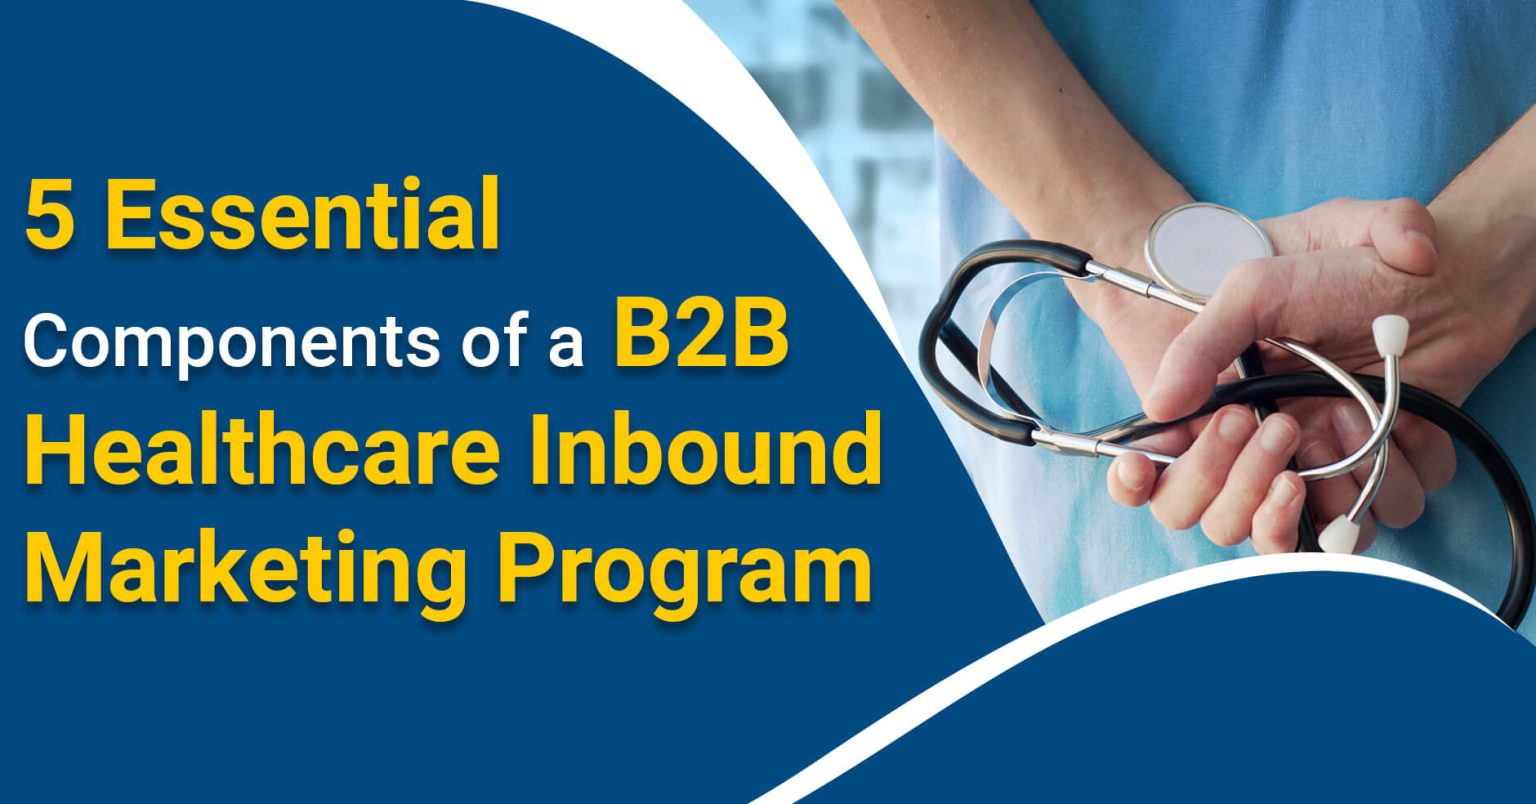 5 Essential Components of a B2B Healthcare Inbound Marketing Program